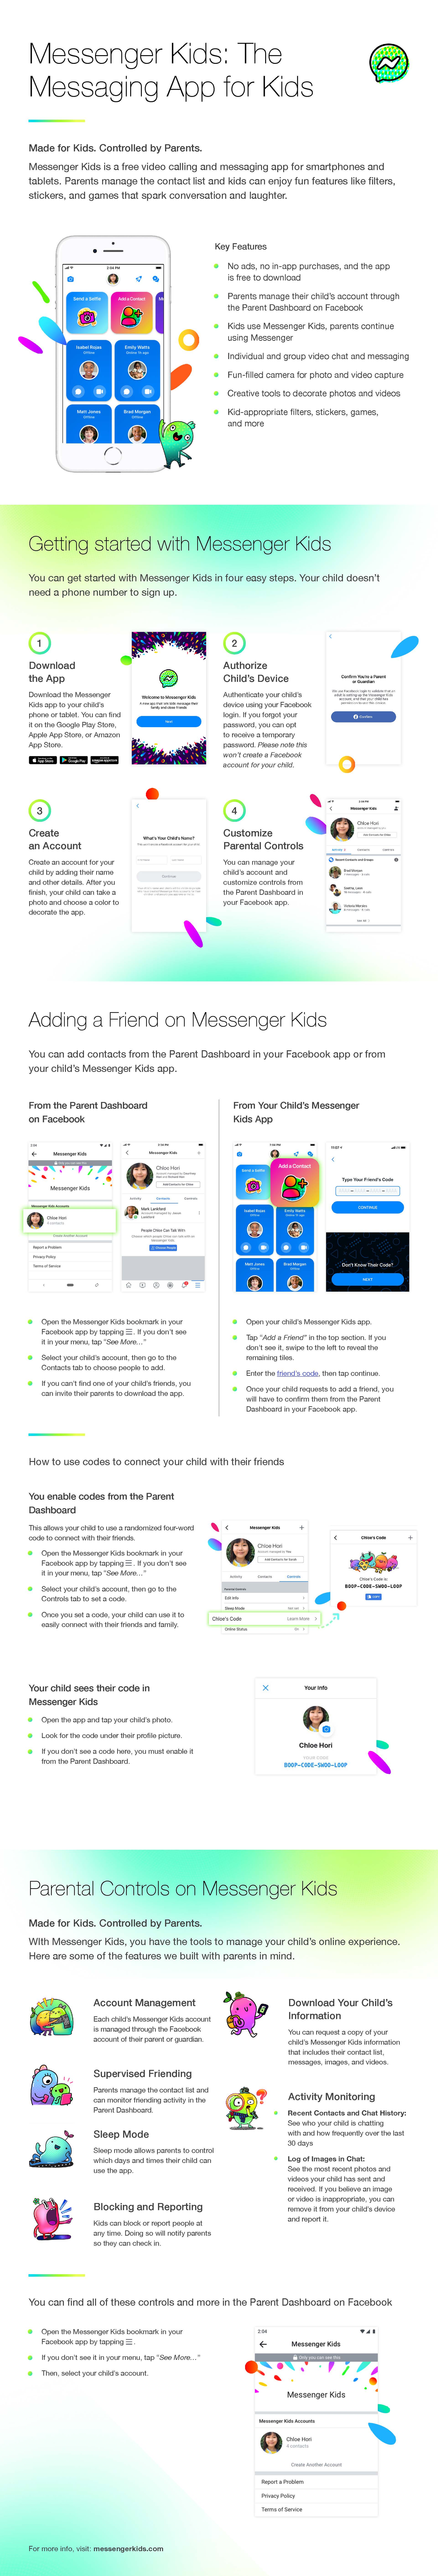 Messenger Kids Infographic